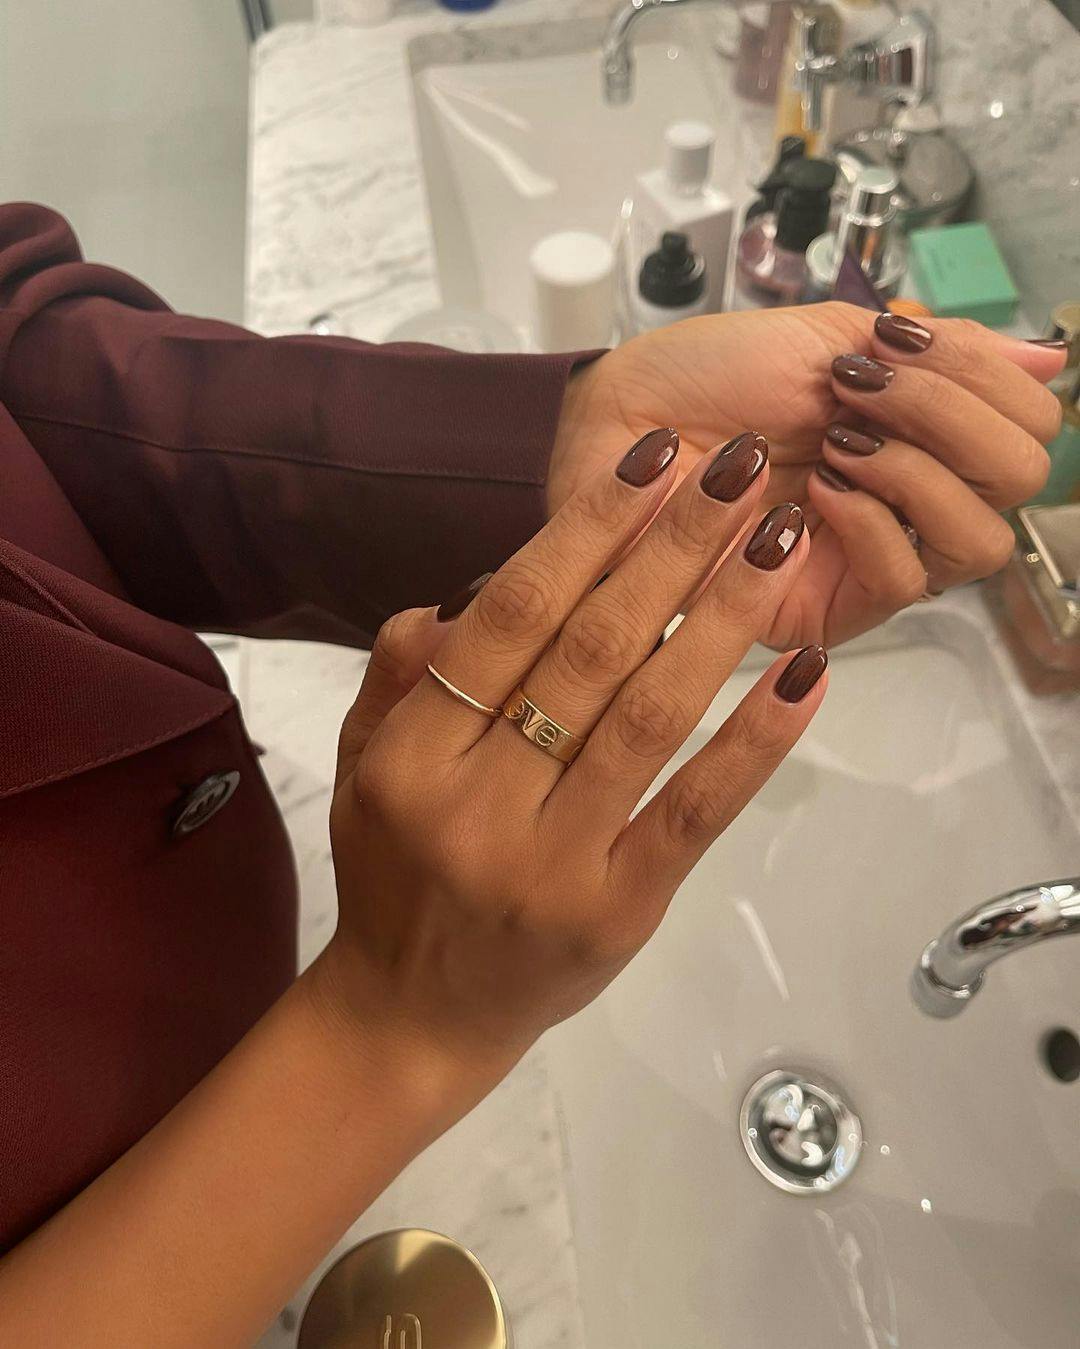 Nail Colors That Look Flattering on Dark Skin Tones - MorningKo | Dark skin  nail polish, Cute nail colors, Gel manicure nails